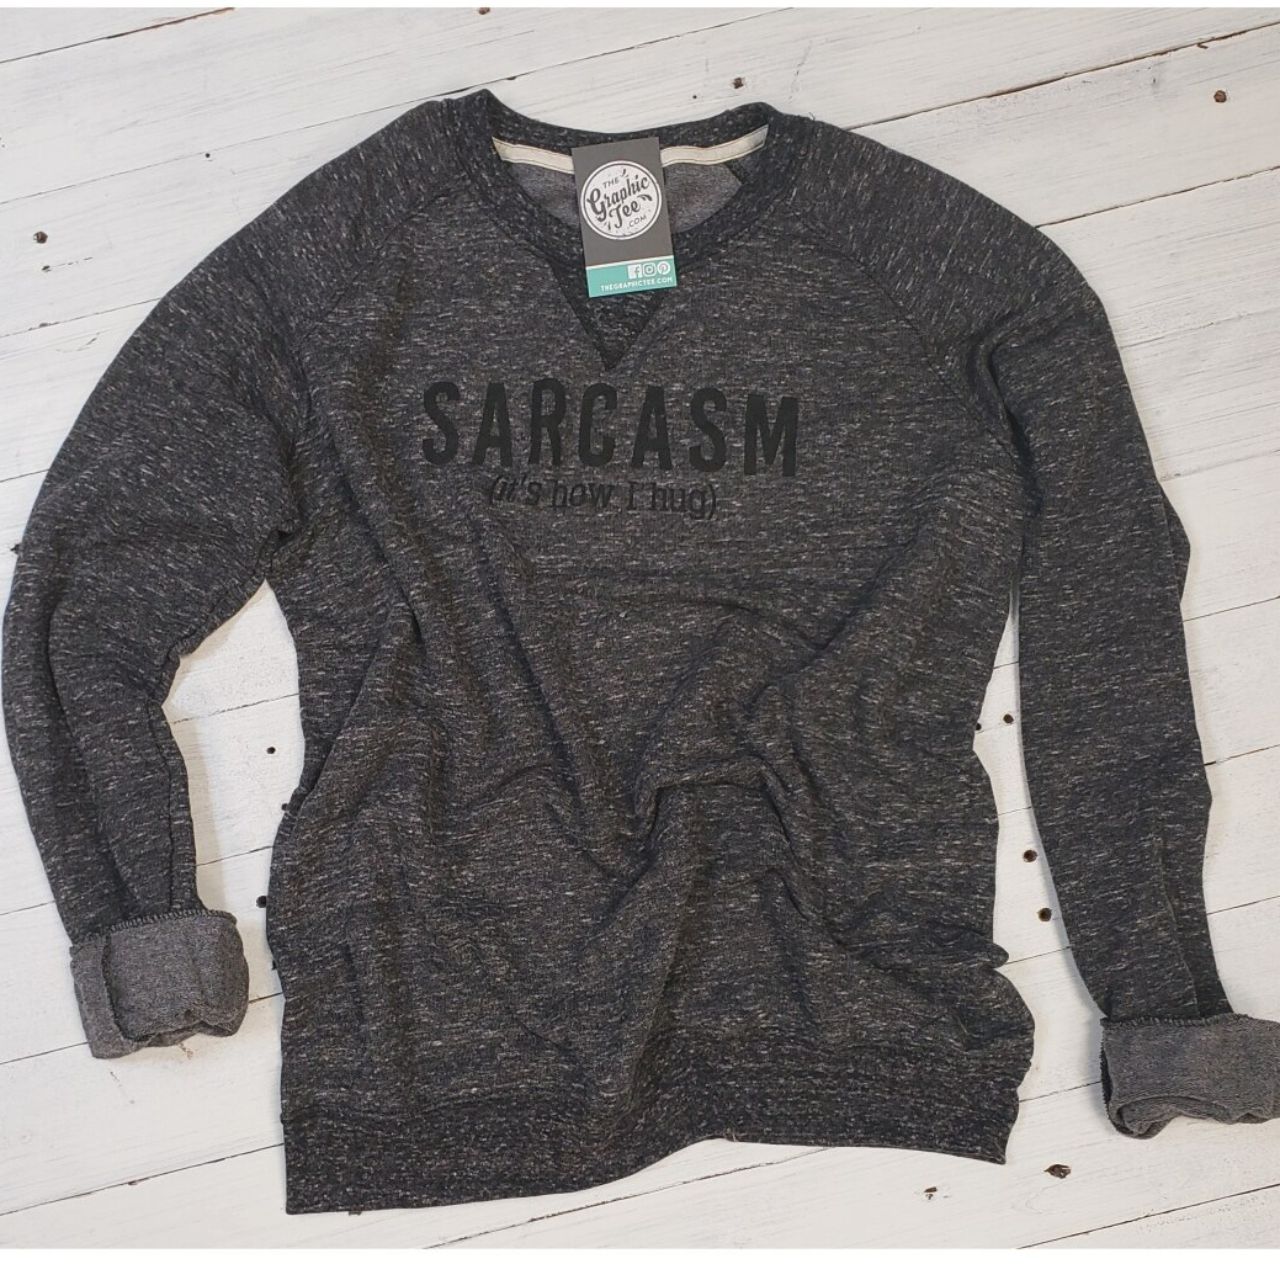 Sarcasm (It's How I Hug) Sweatshirt - The Graphic Tee